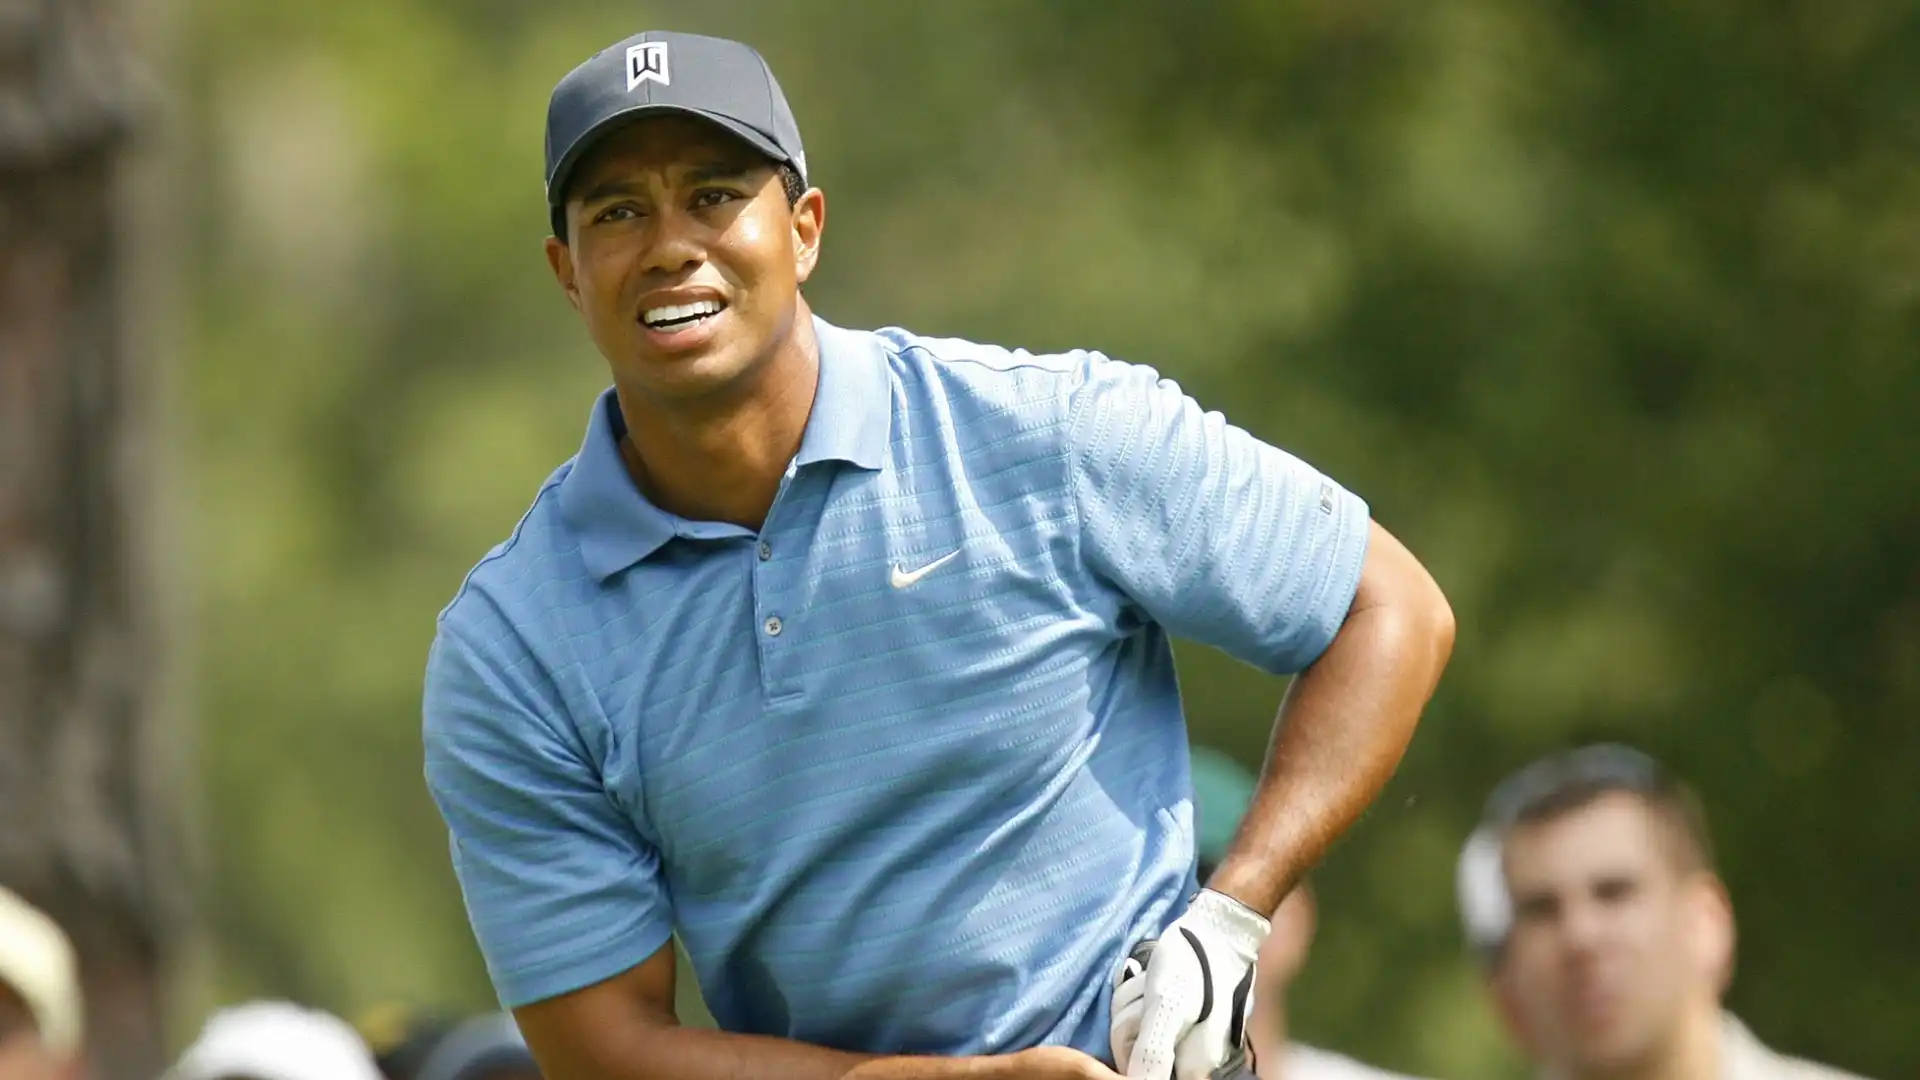 2007: Tiger Woods (Golf), guadagni totali stimati 100 milioni di dollari